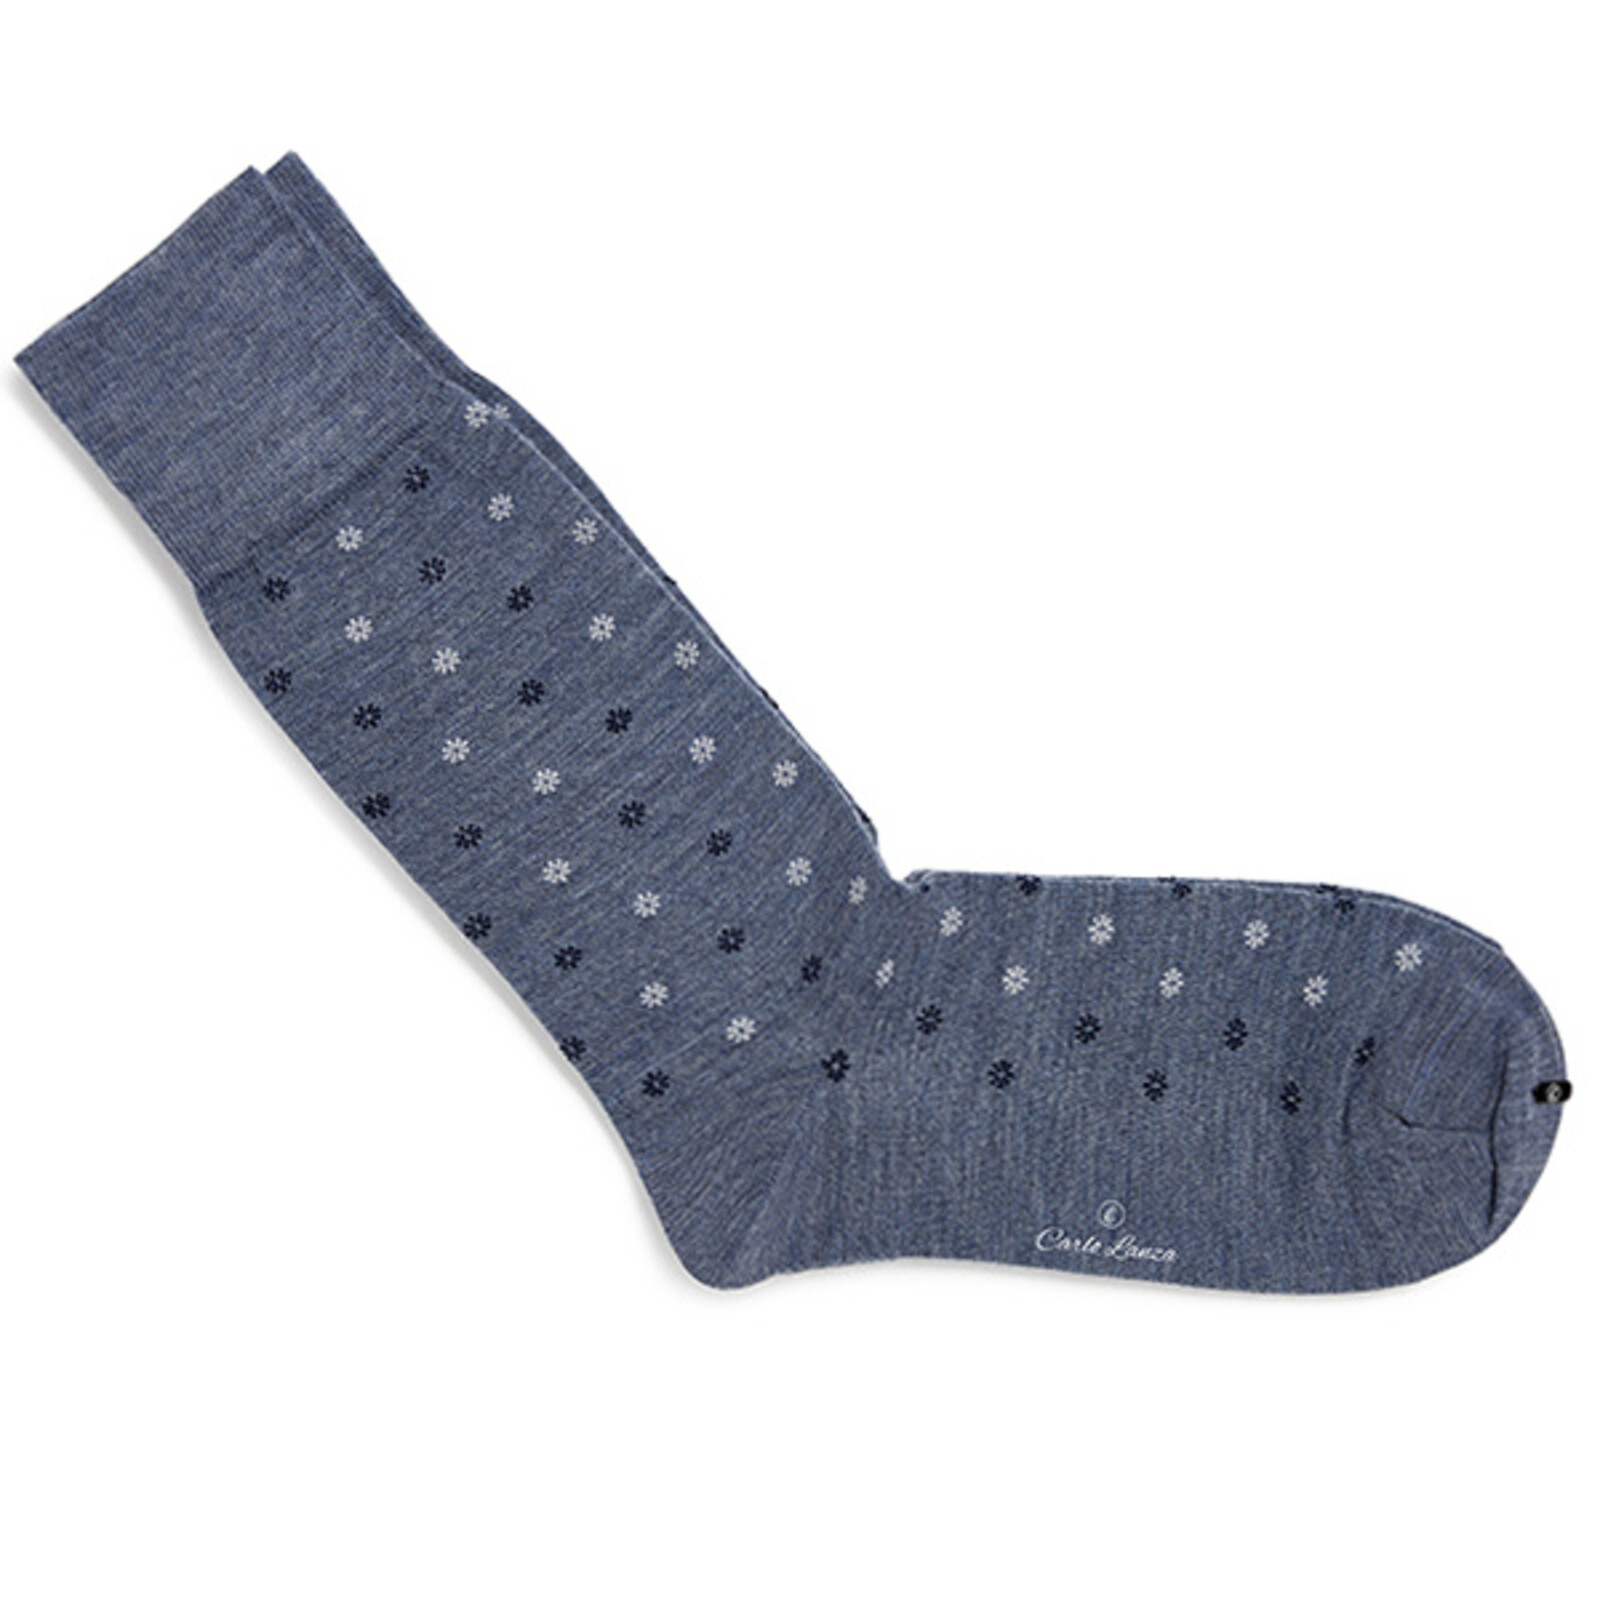 Carlo Lanza Lichtblauwe sokken fiore | Carlo Lanza